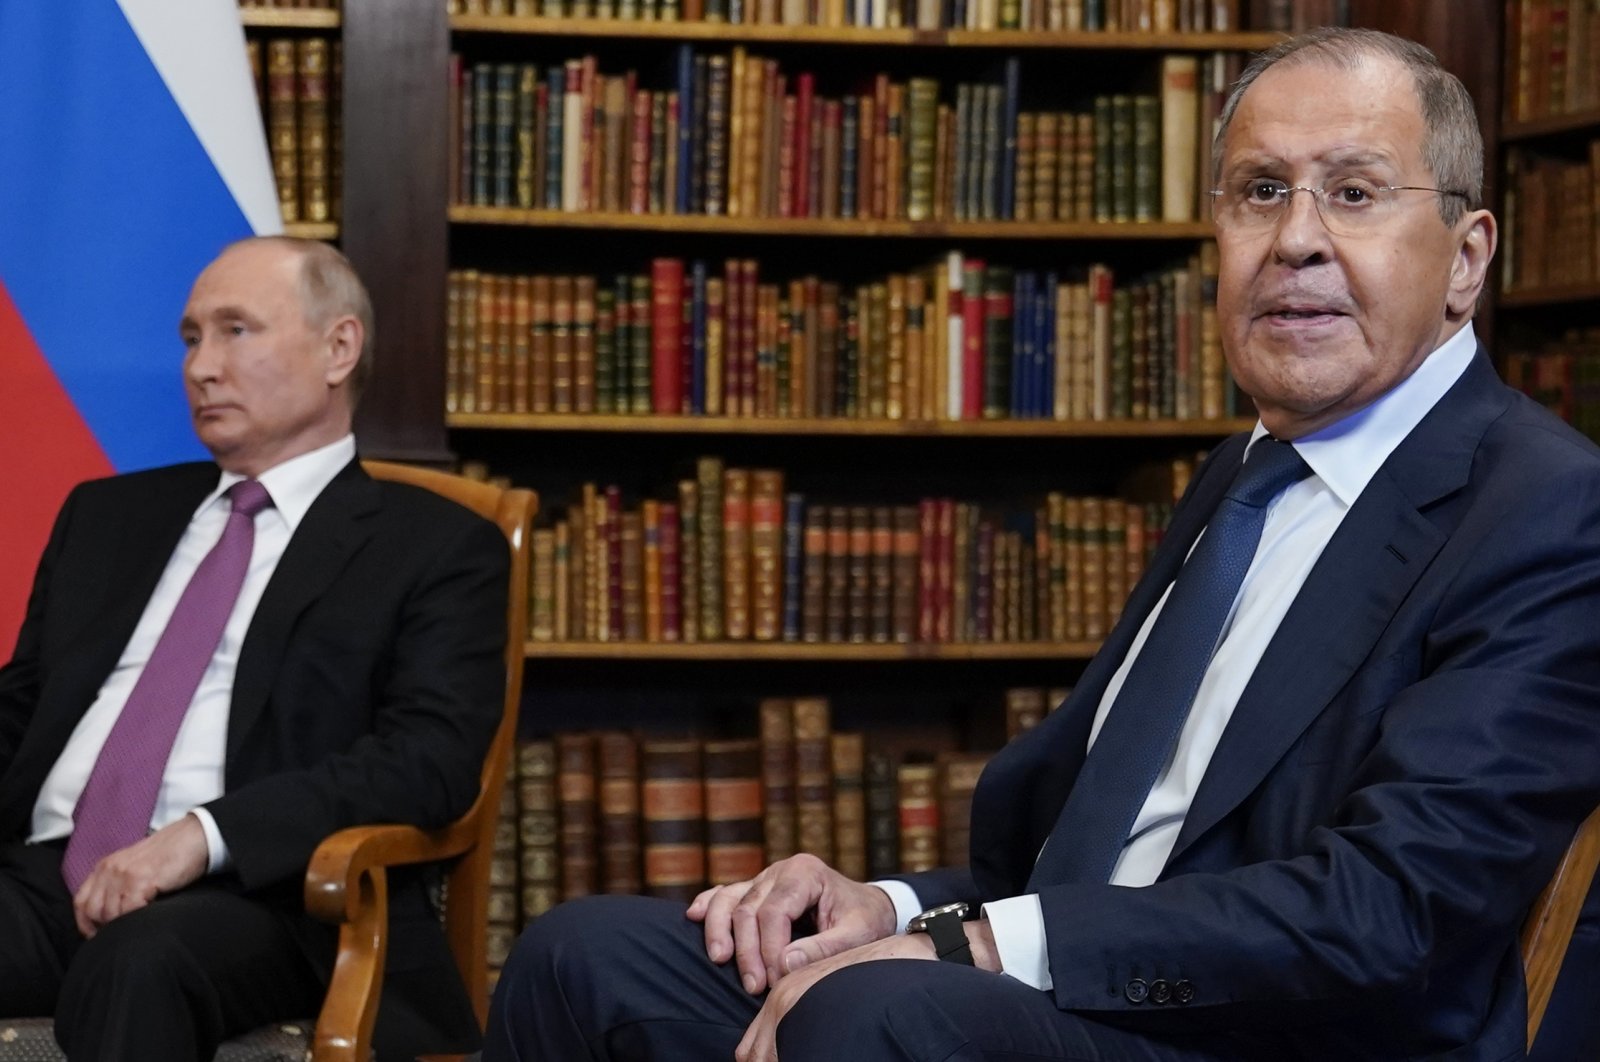 Russian President Vladimir Putin and Russian Foreign Minister Sergei Lavrov, as they meet with President Joe Biden, June 16, 2021, in Geneva, Switzerland. (AP Photo)